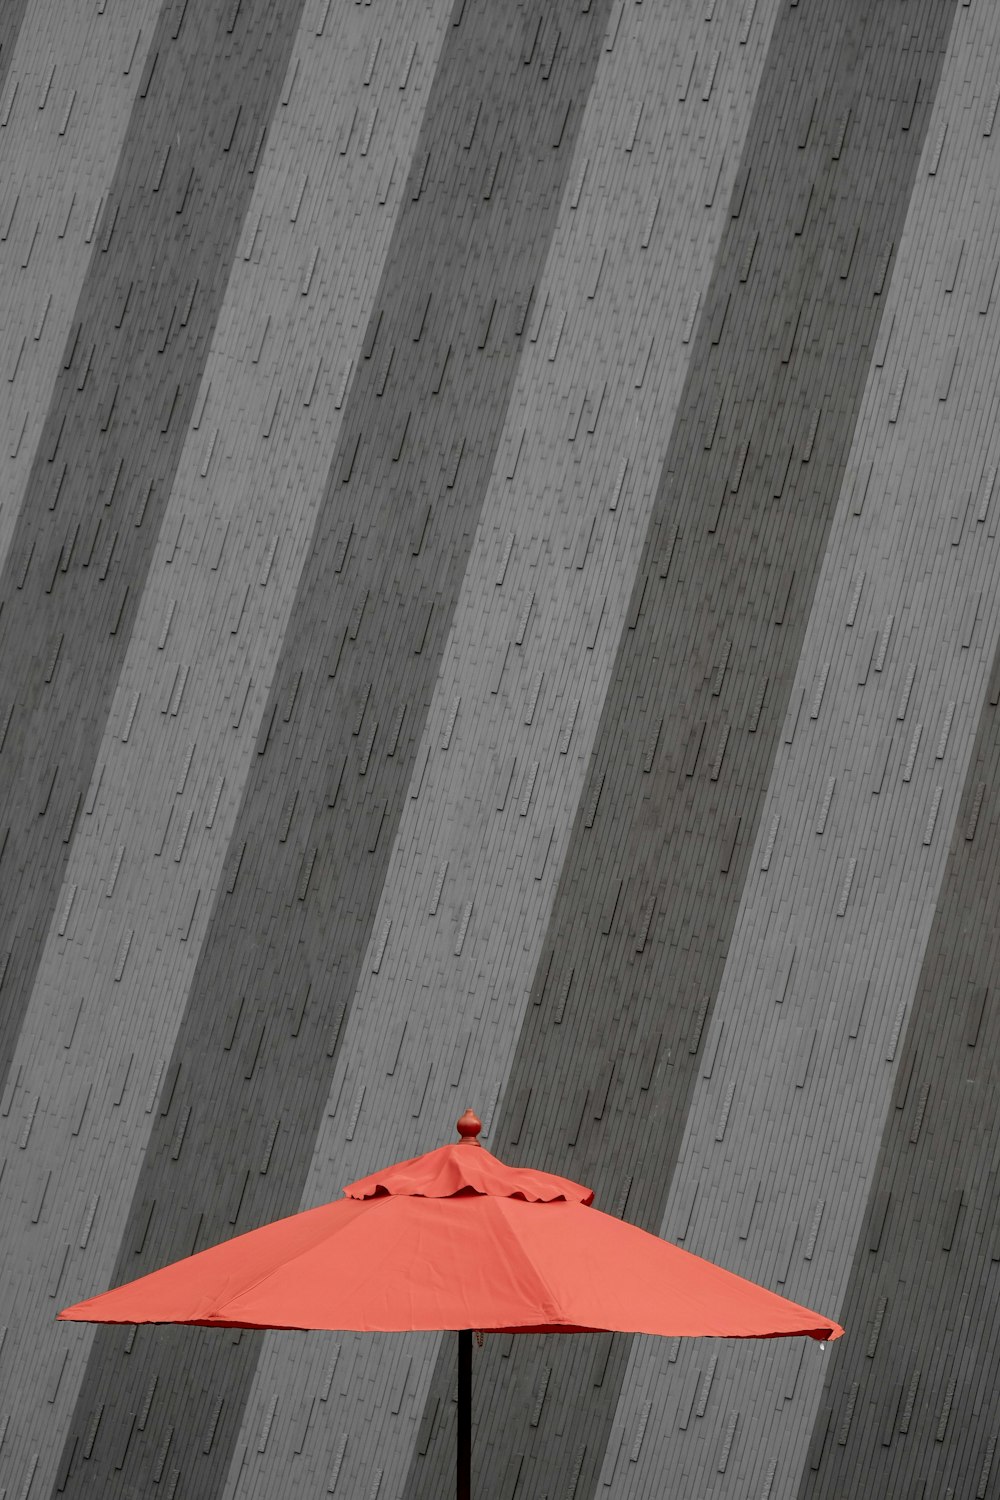 orange and black parasol near the gray wall